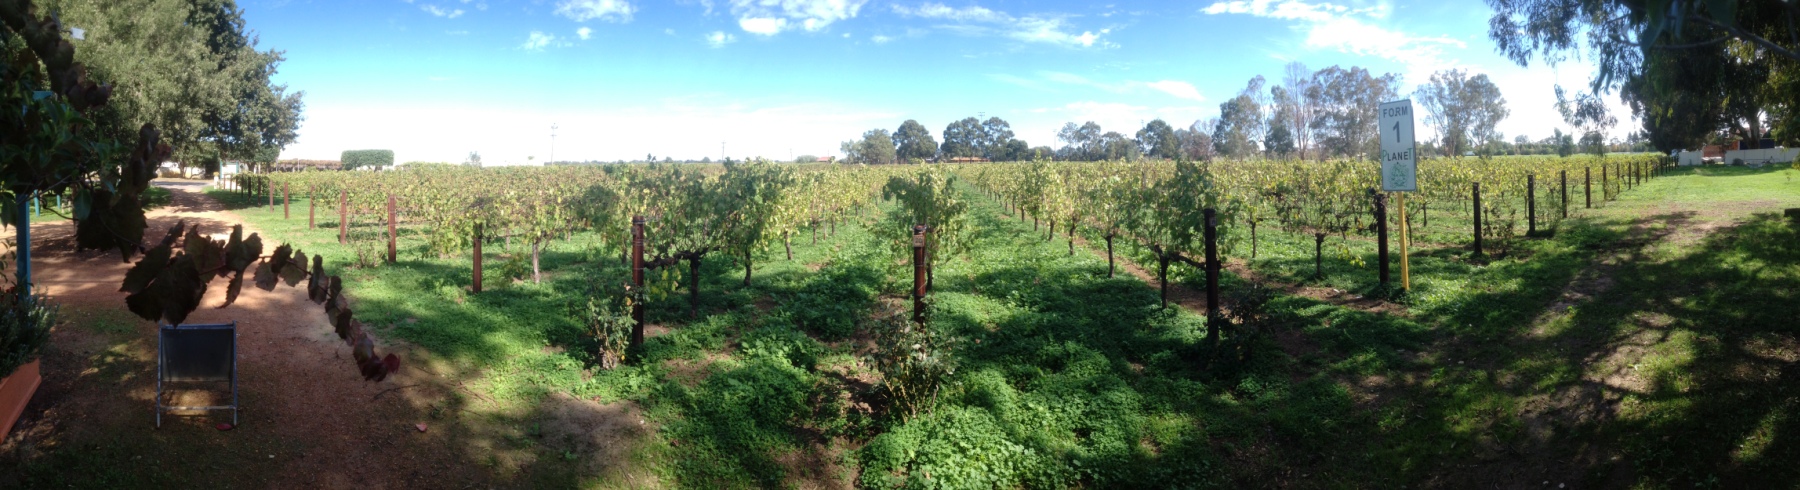 Organic vineyard panorama